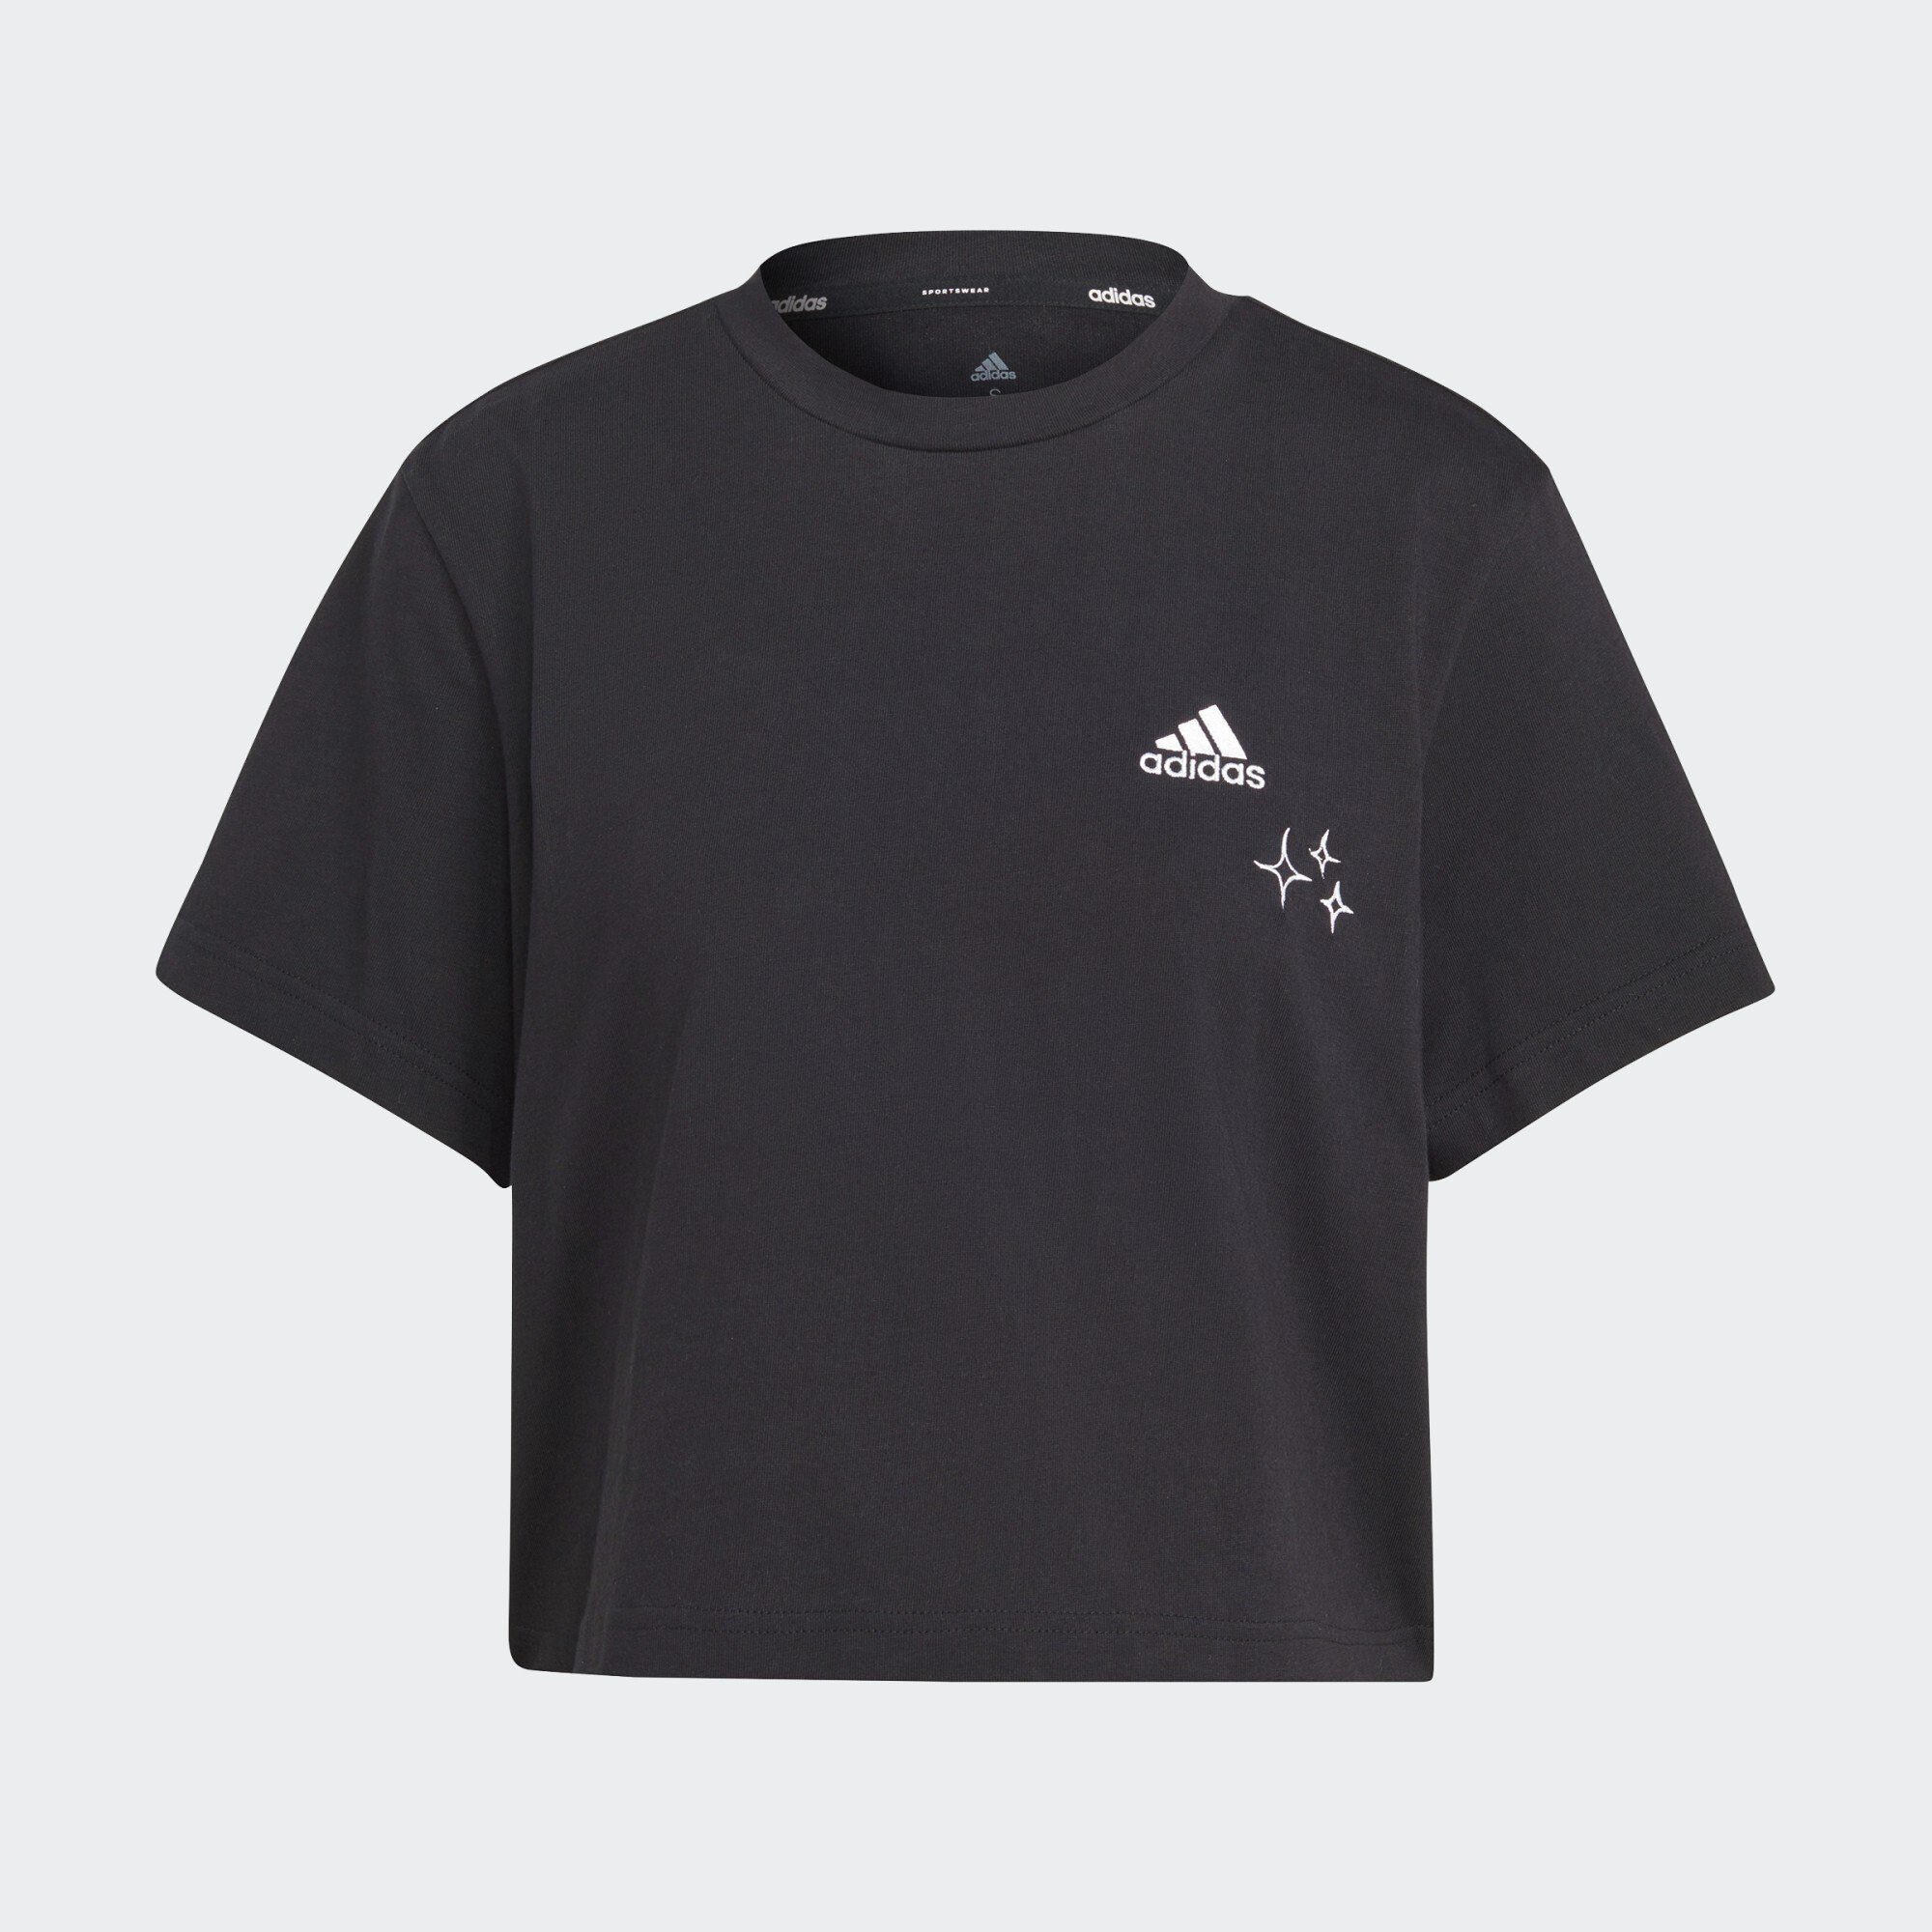 SCRIBBLE / White Sportswear adidas CROP-SHIRT Black T-Shirt EMBROIDERY